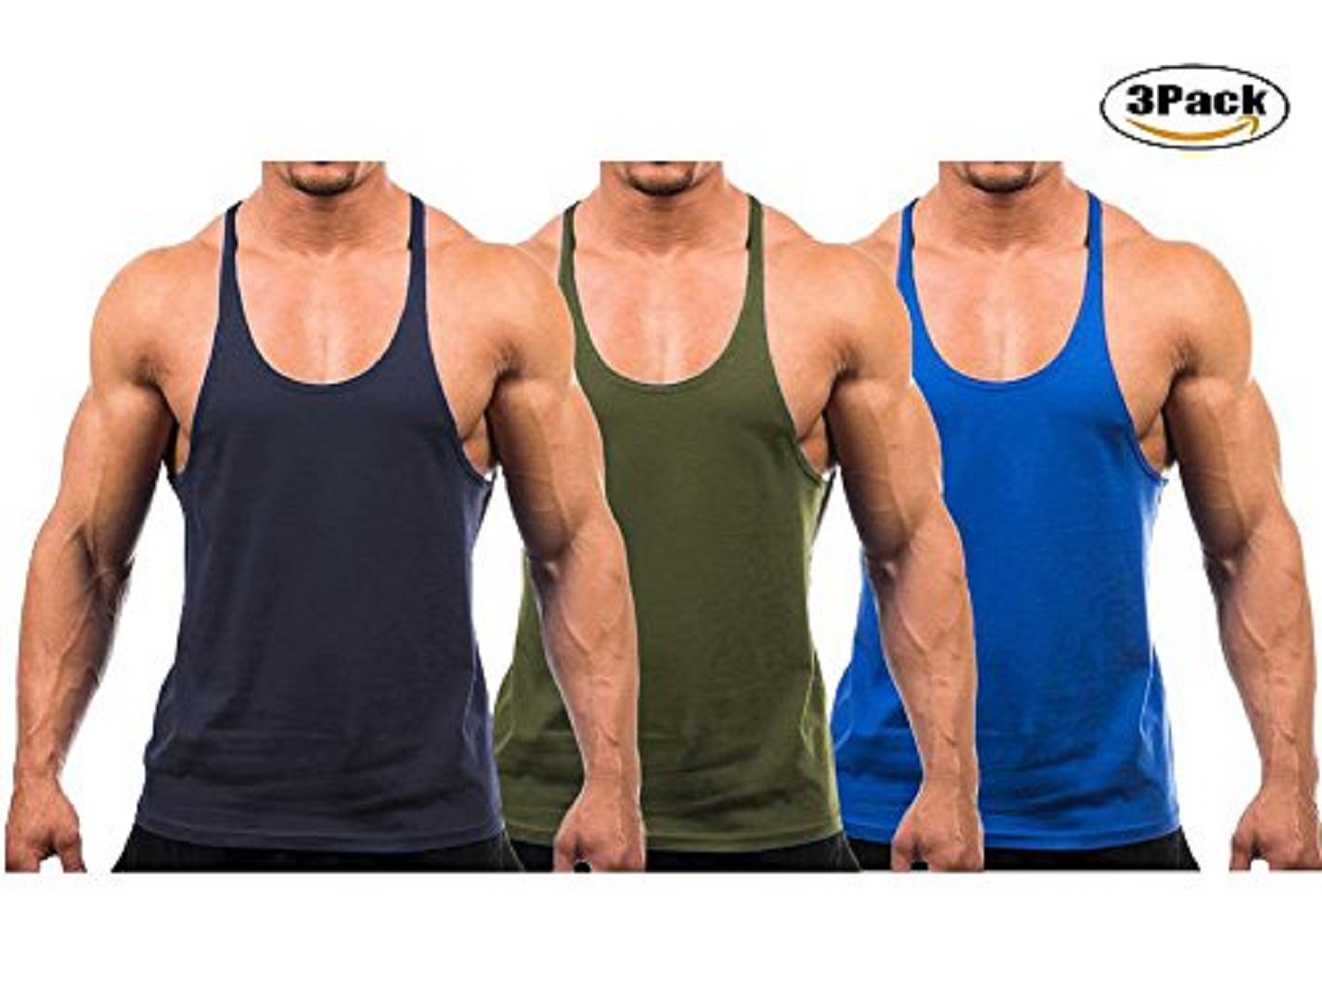 Buy The Blazze Men's Blank Stringer Y Back Bodybuilding Gym Tank Tops ...